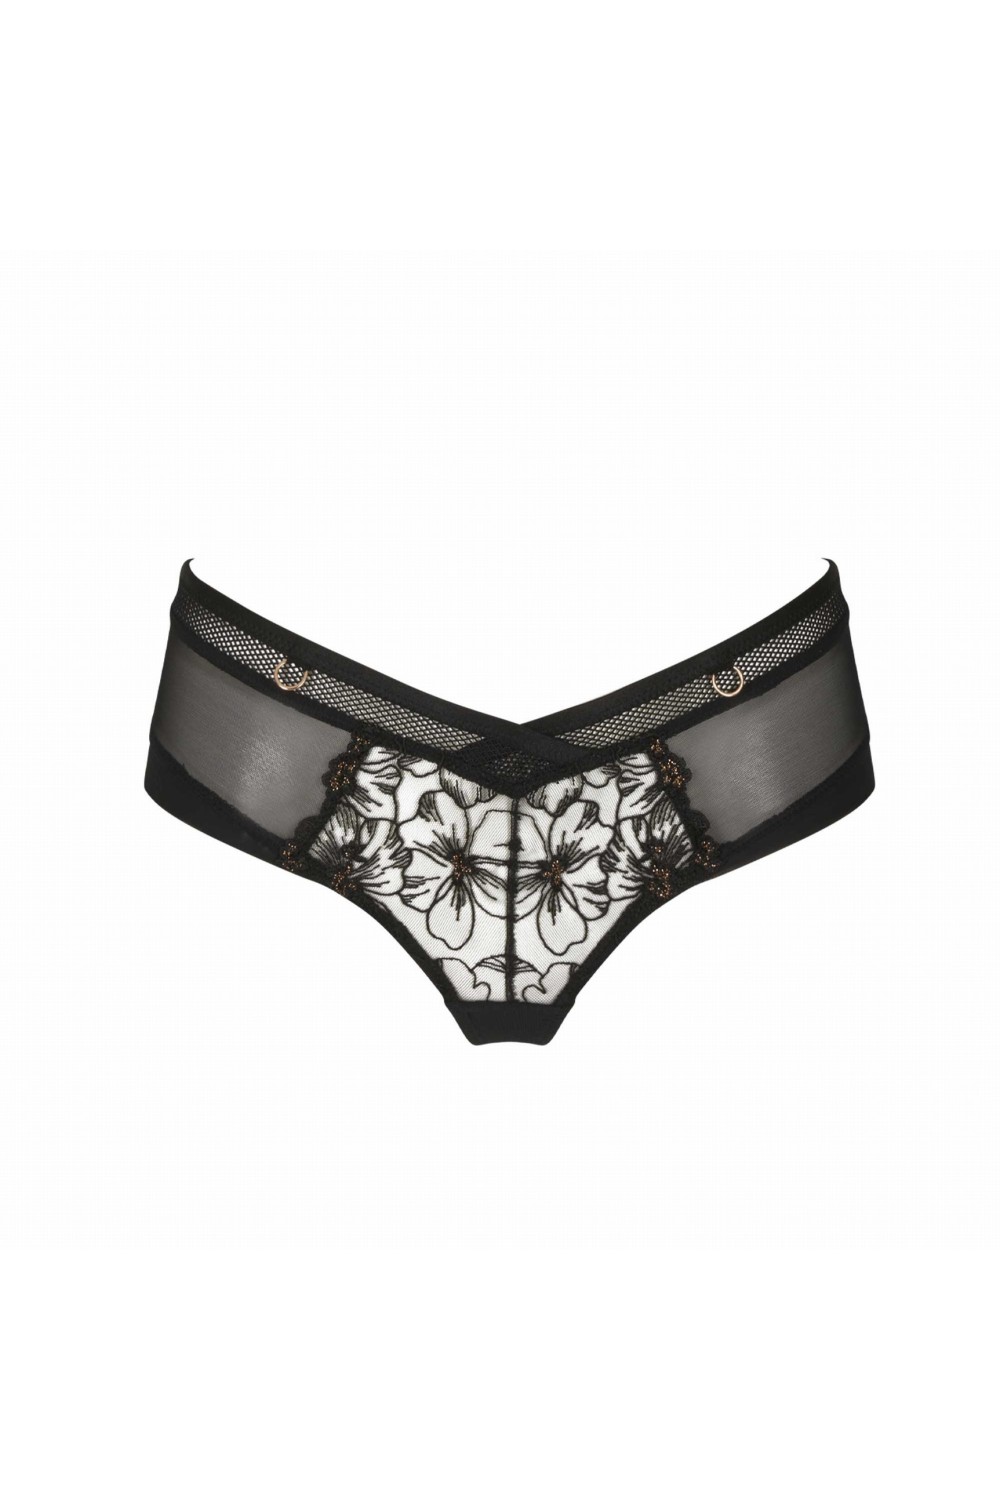 Ivy shorty - Luxury lingerie – Impudique Official Website